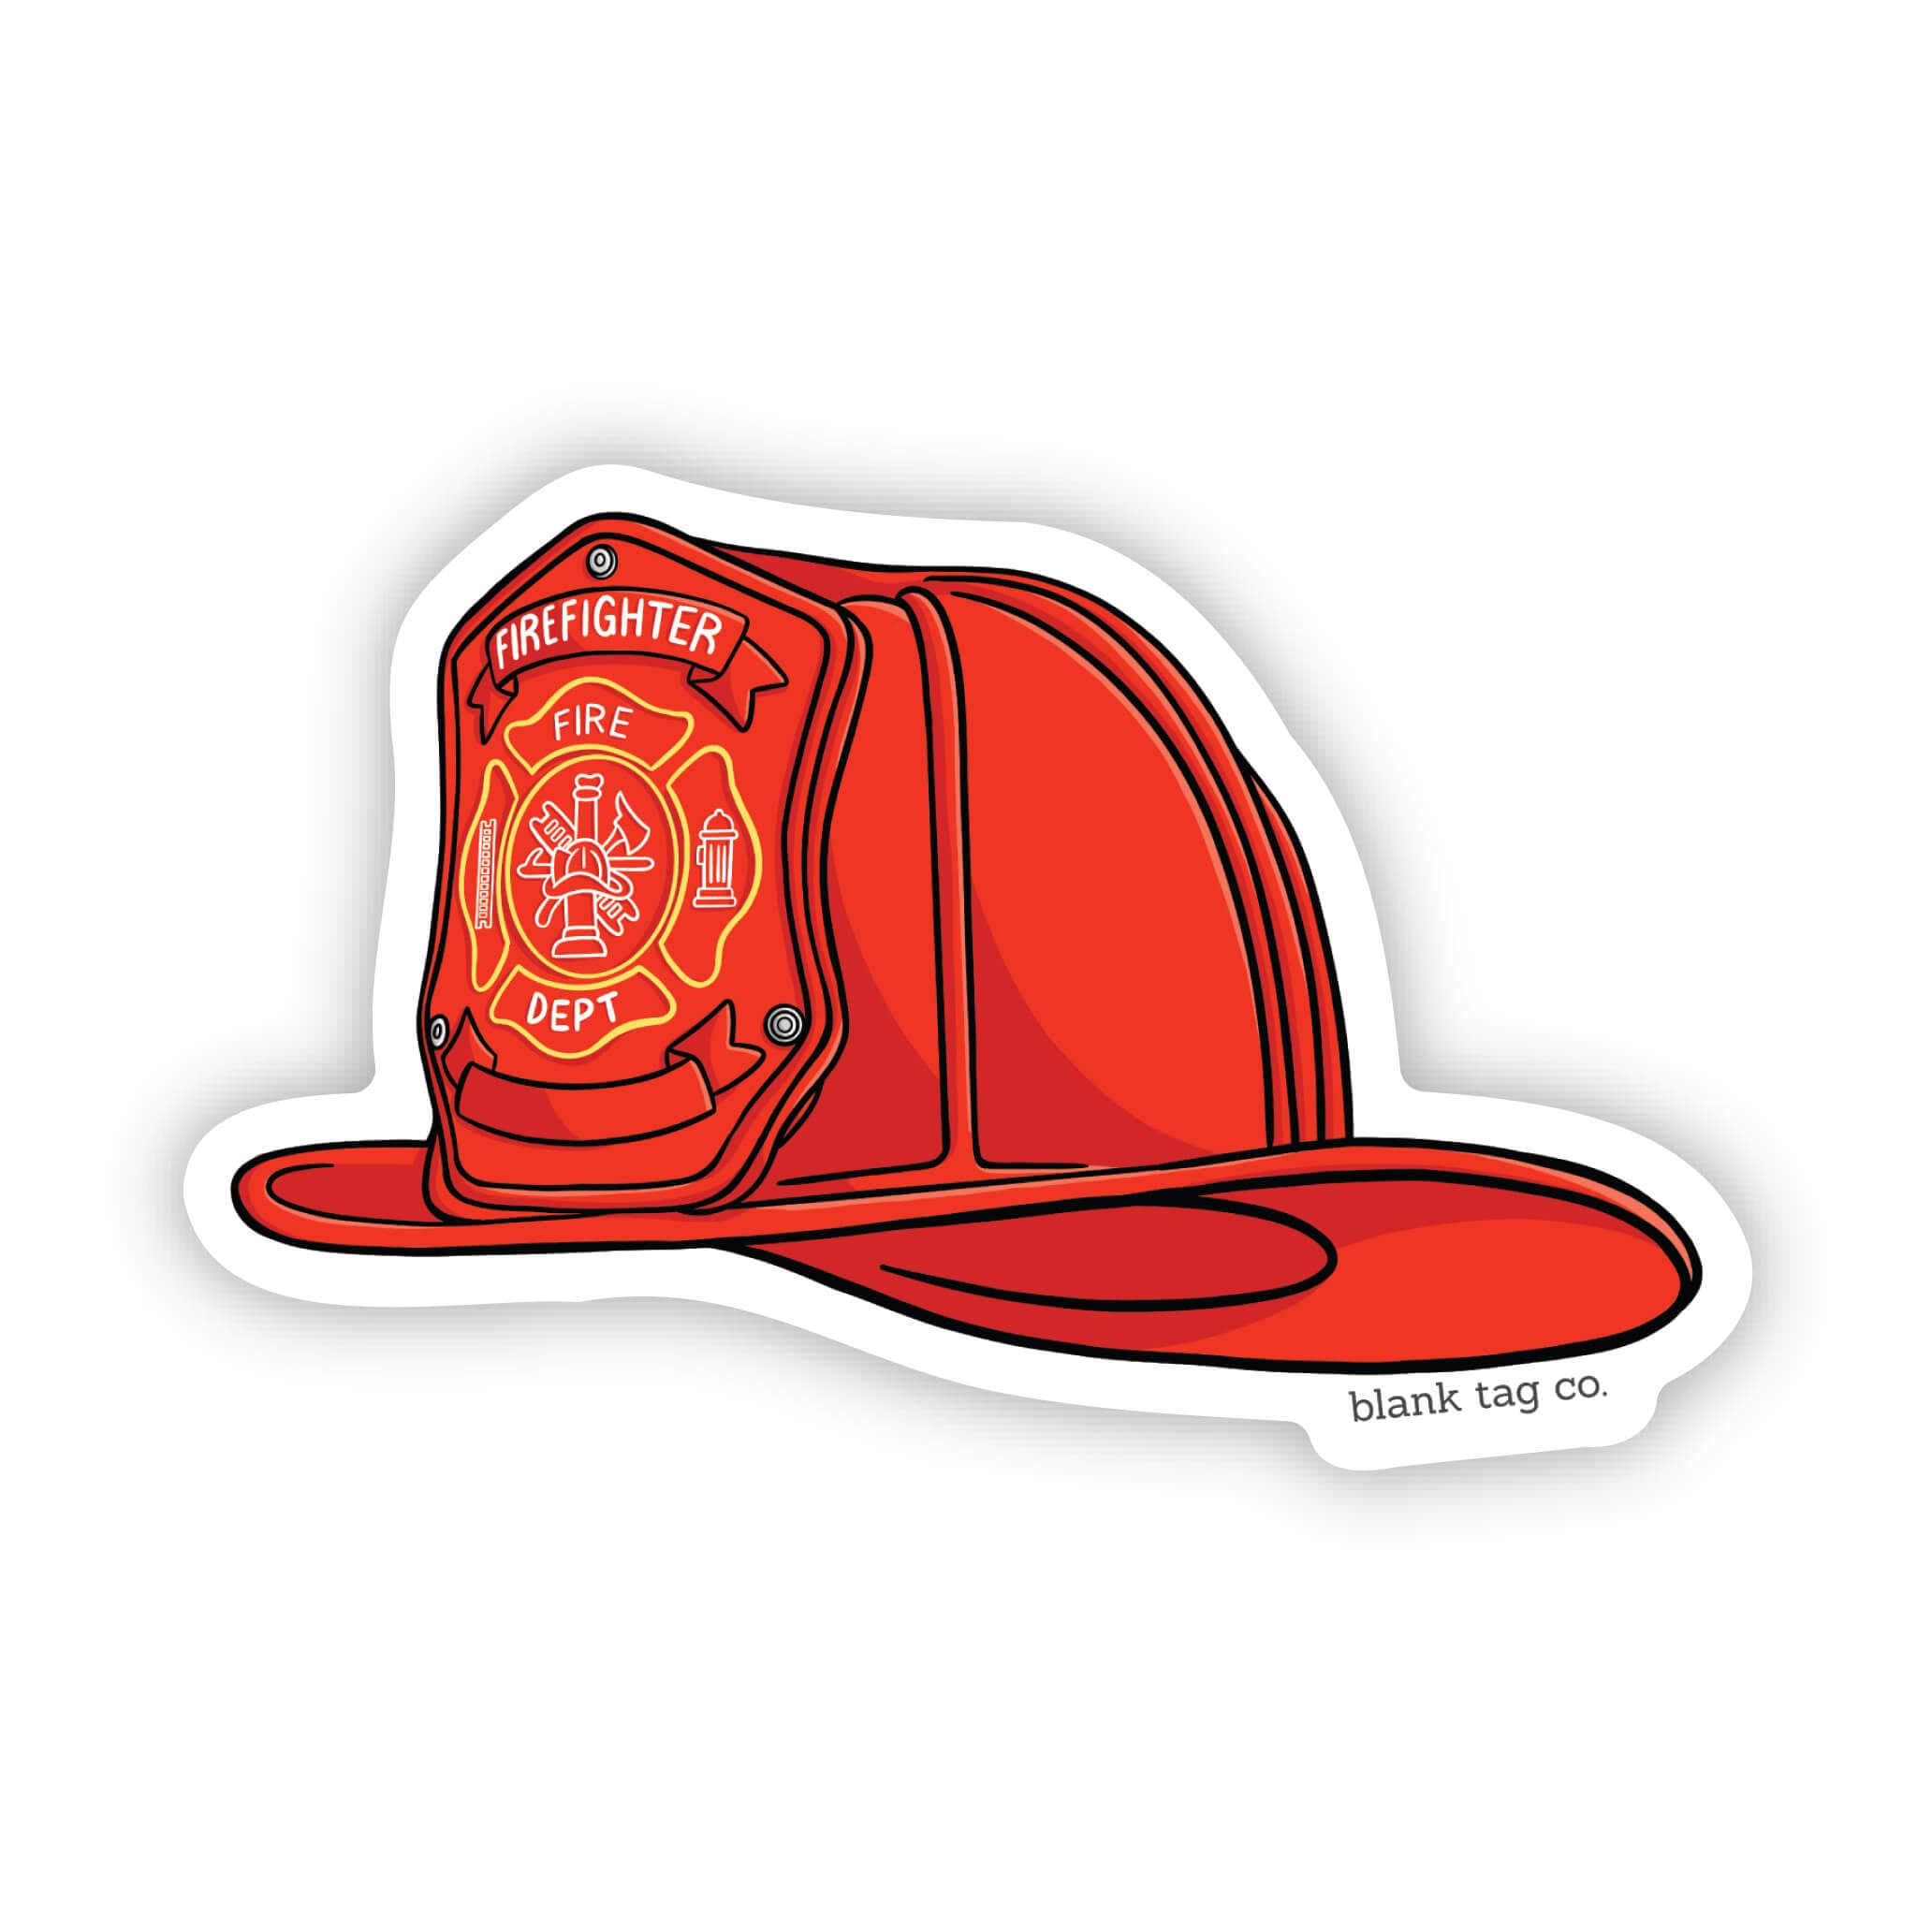 The Firefighter Helmet Sticker